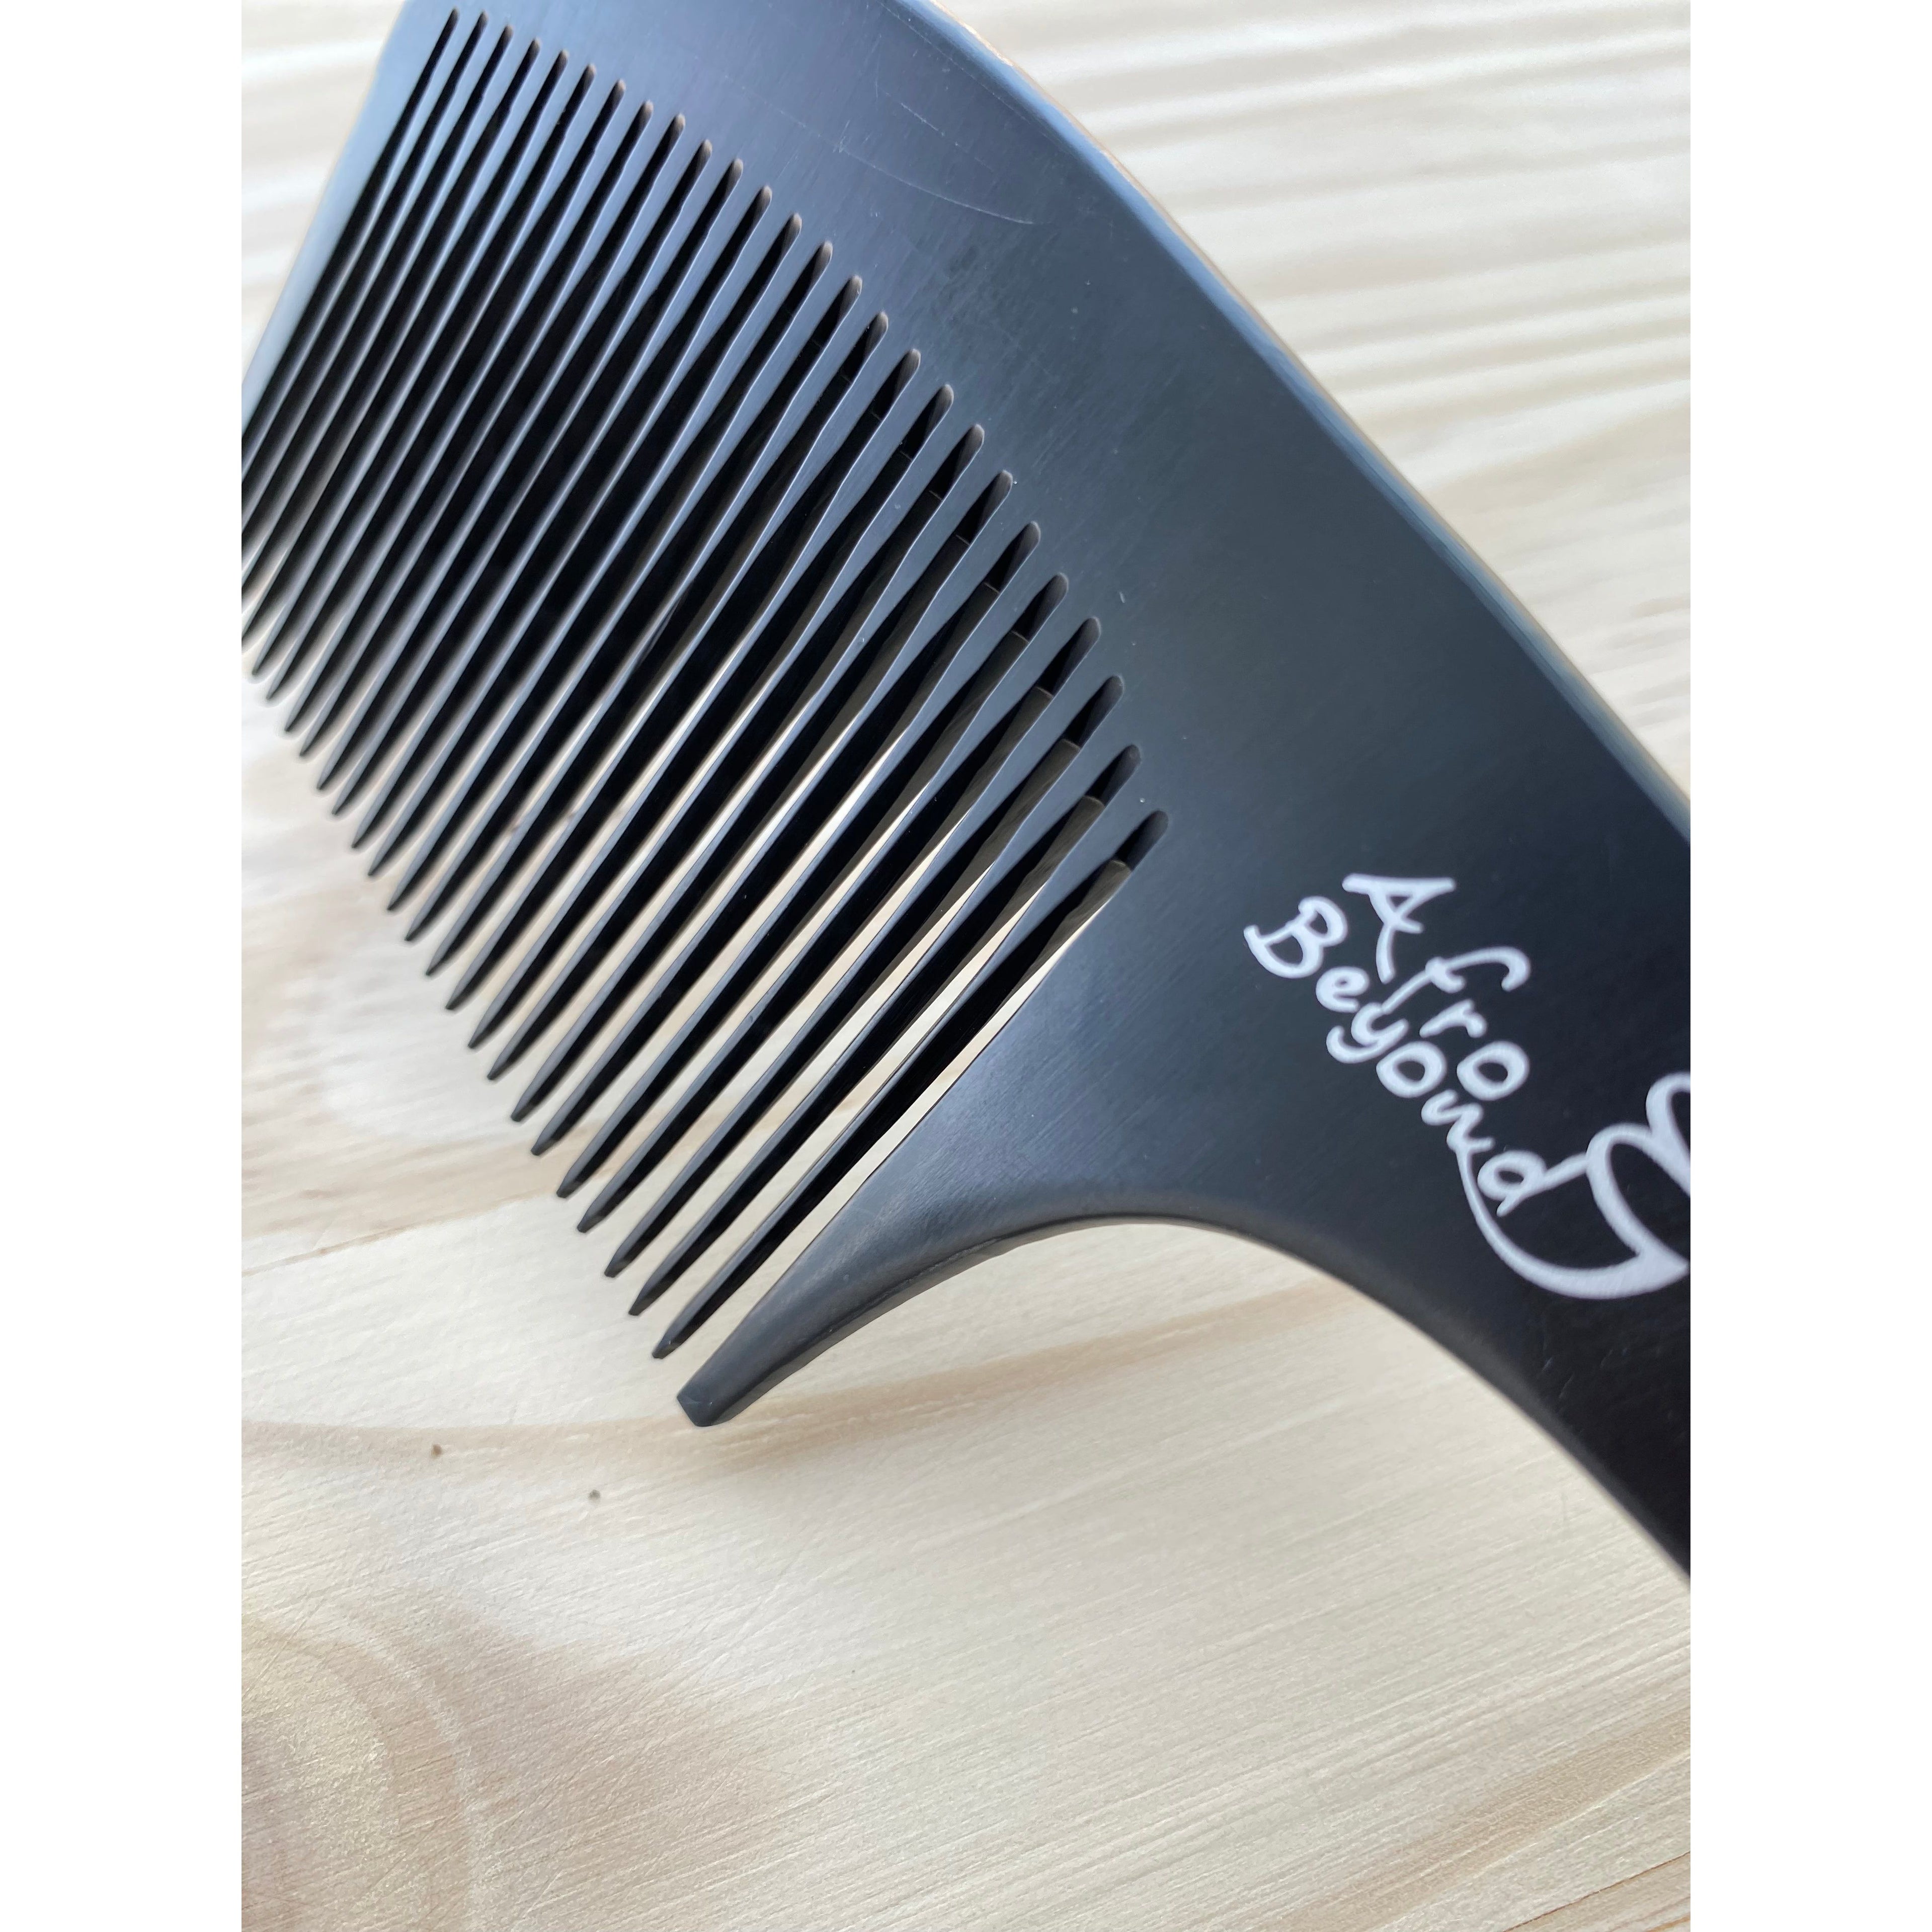 The Lucette detangling comb